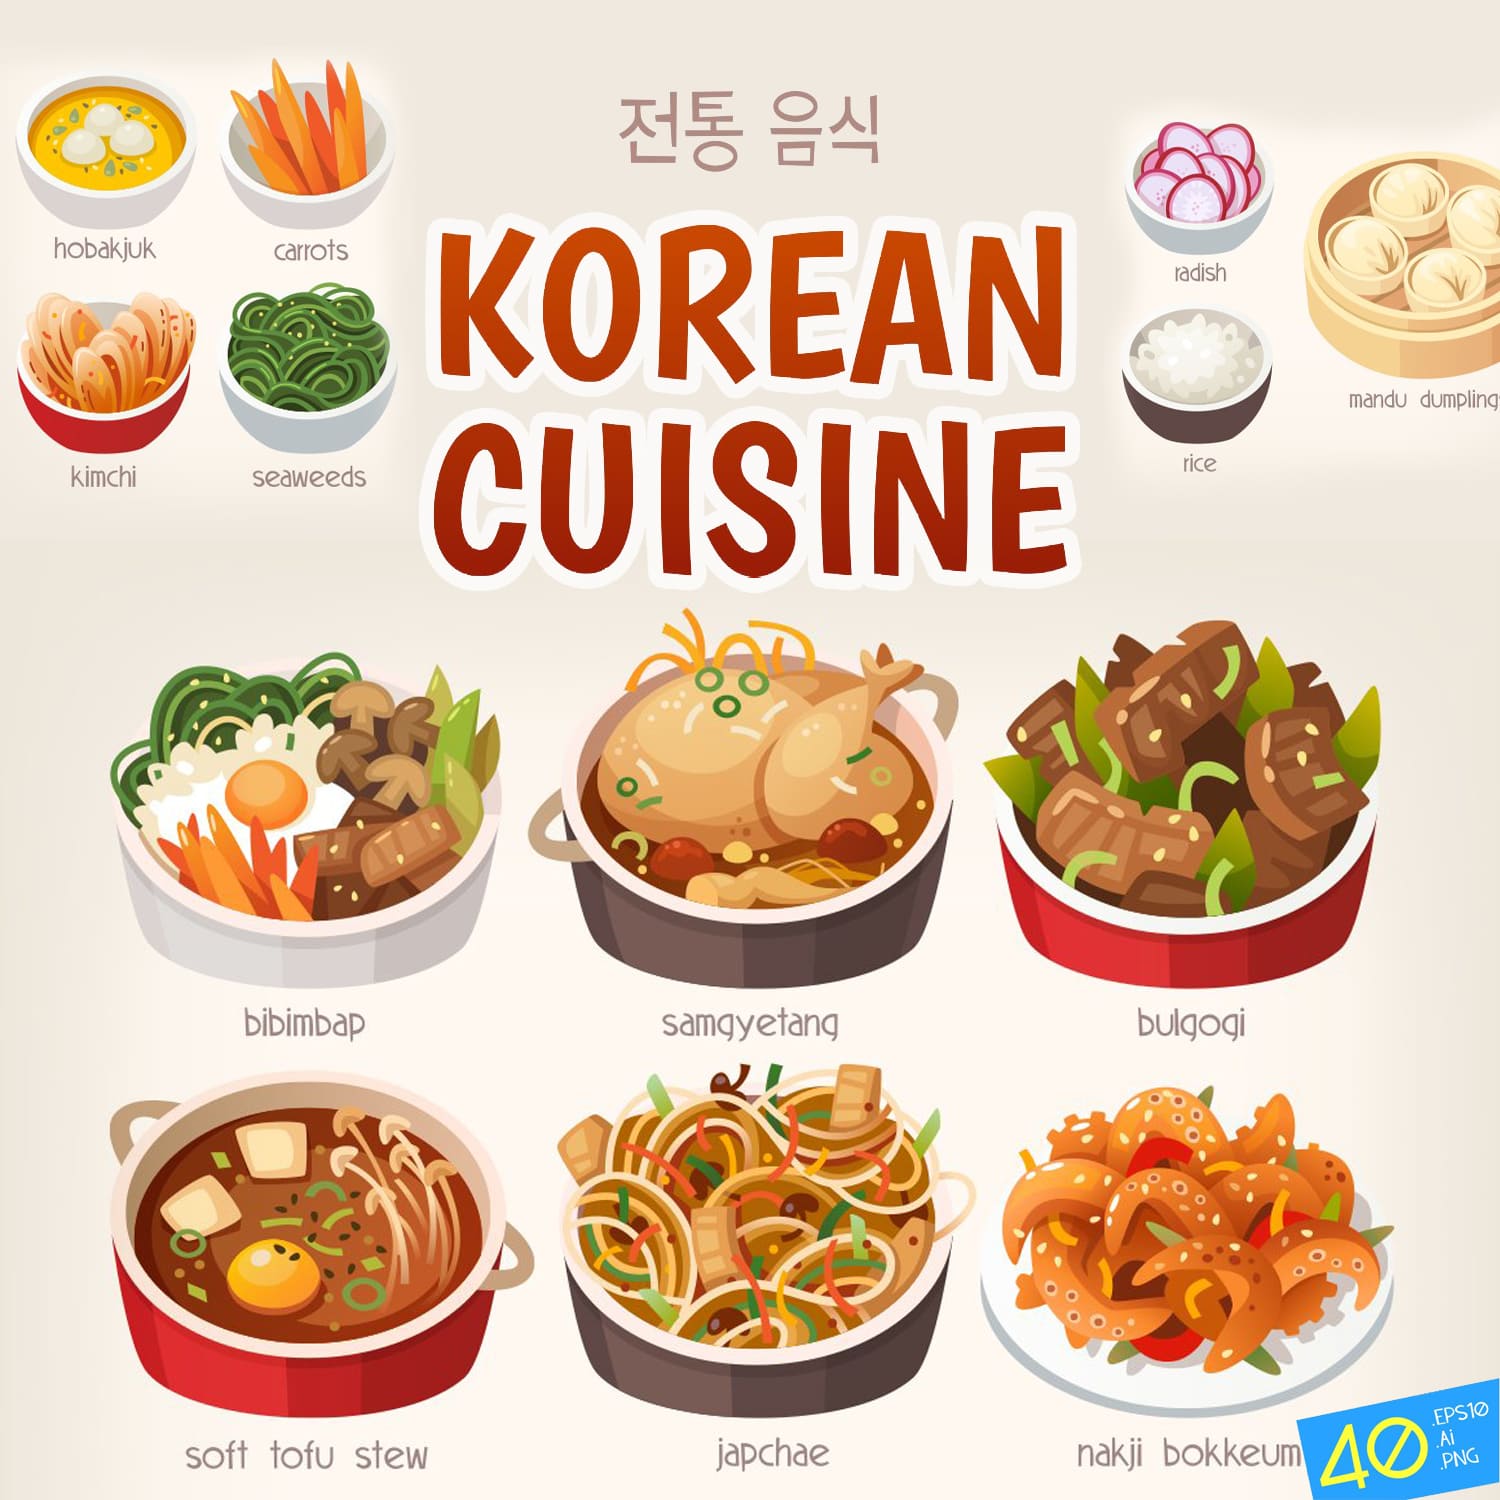 Korean cuisine dishes cover.